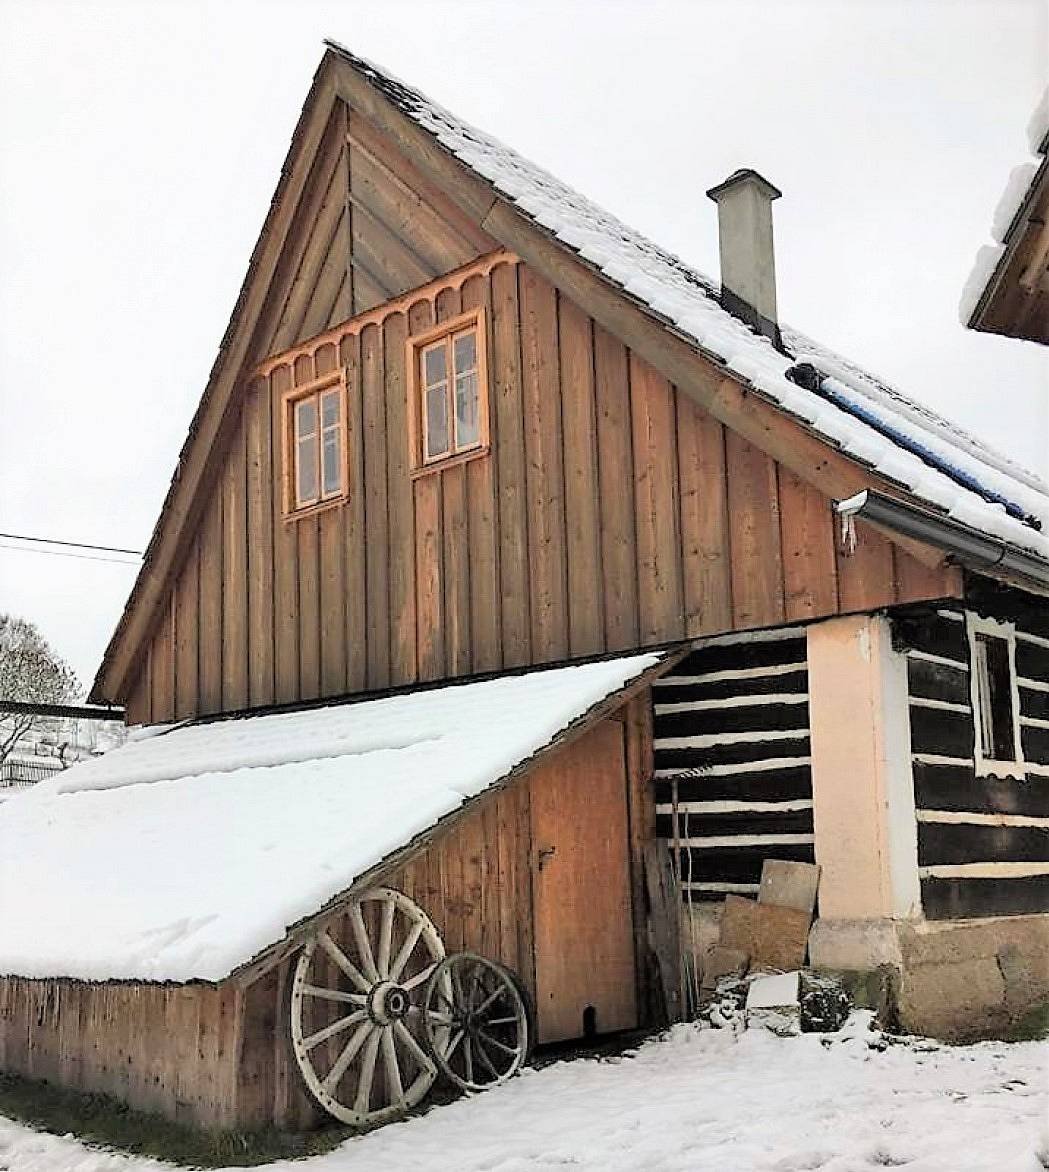 La casa de troncos de cuento de hadas de Horní Staré Buky